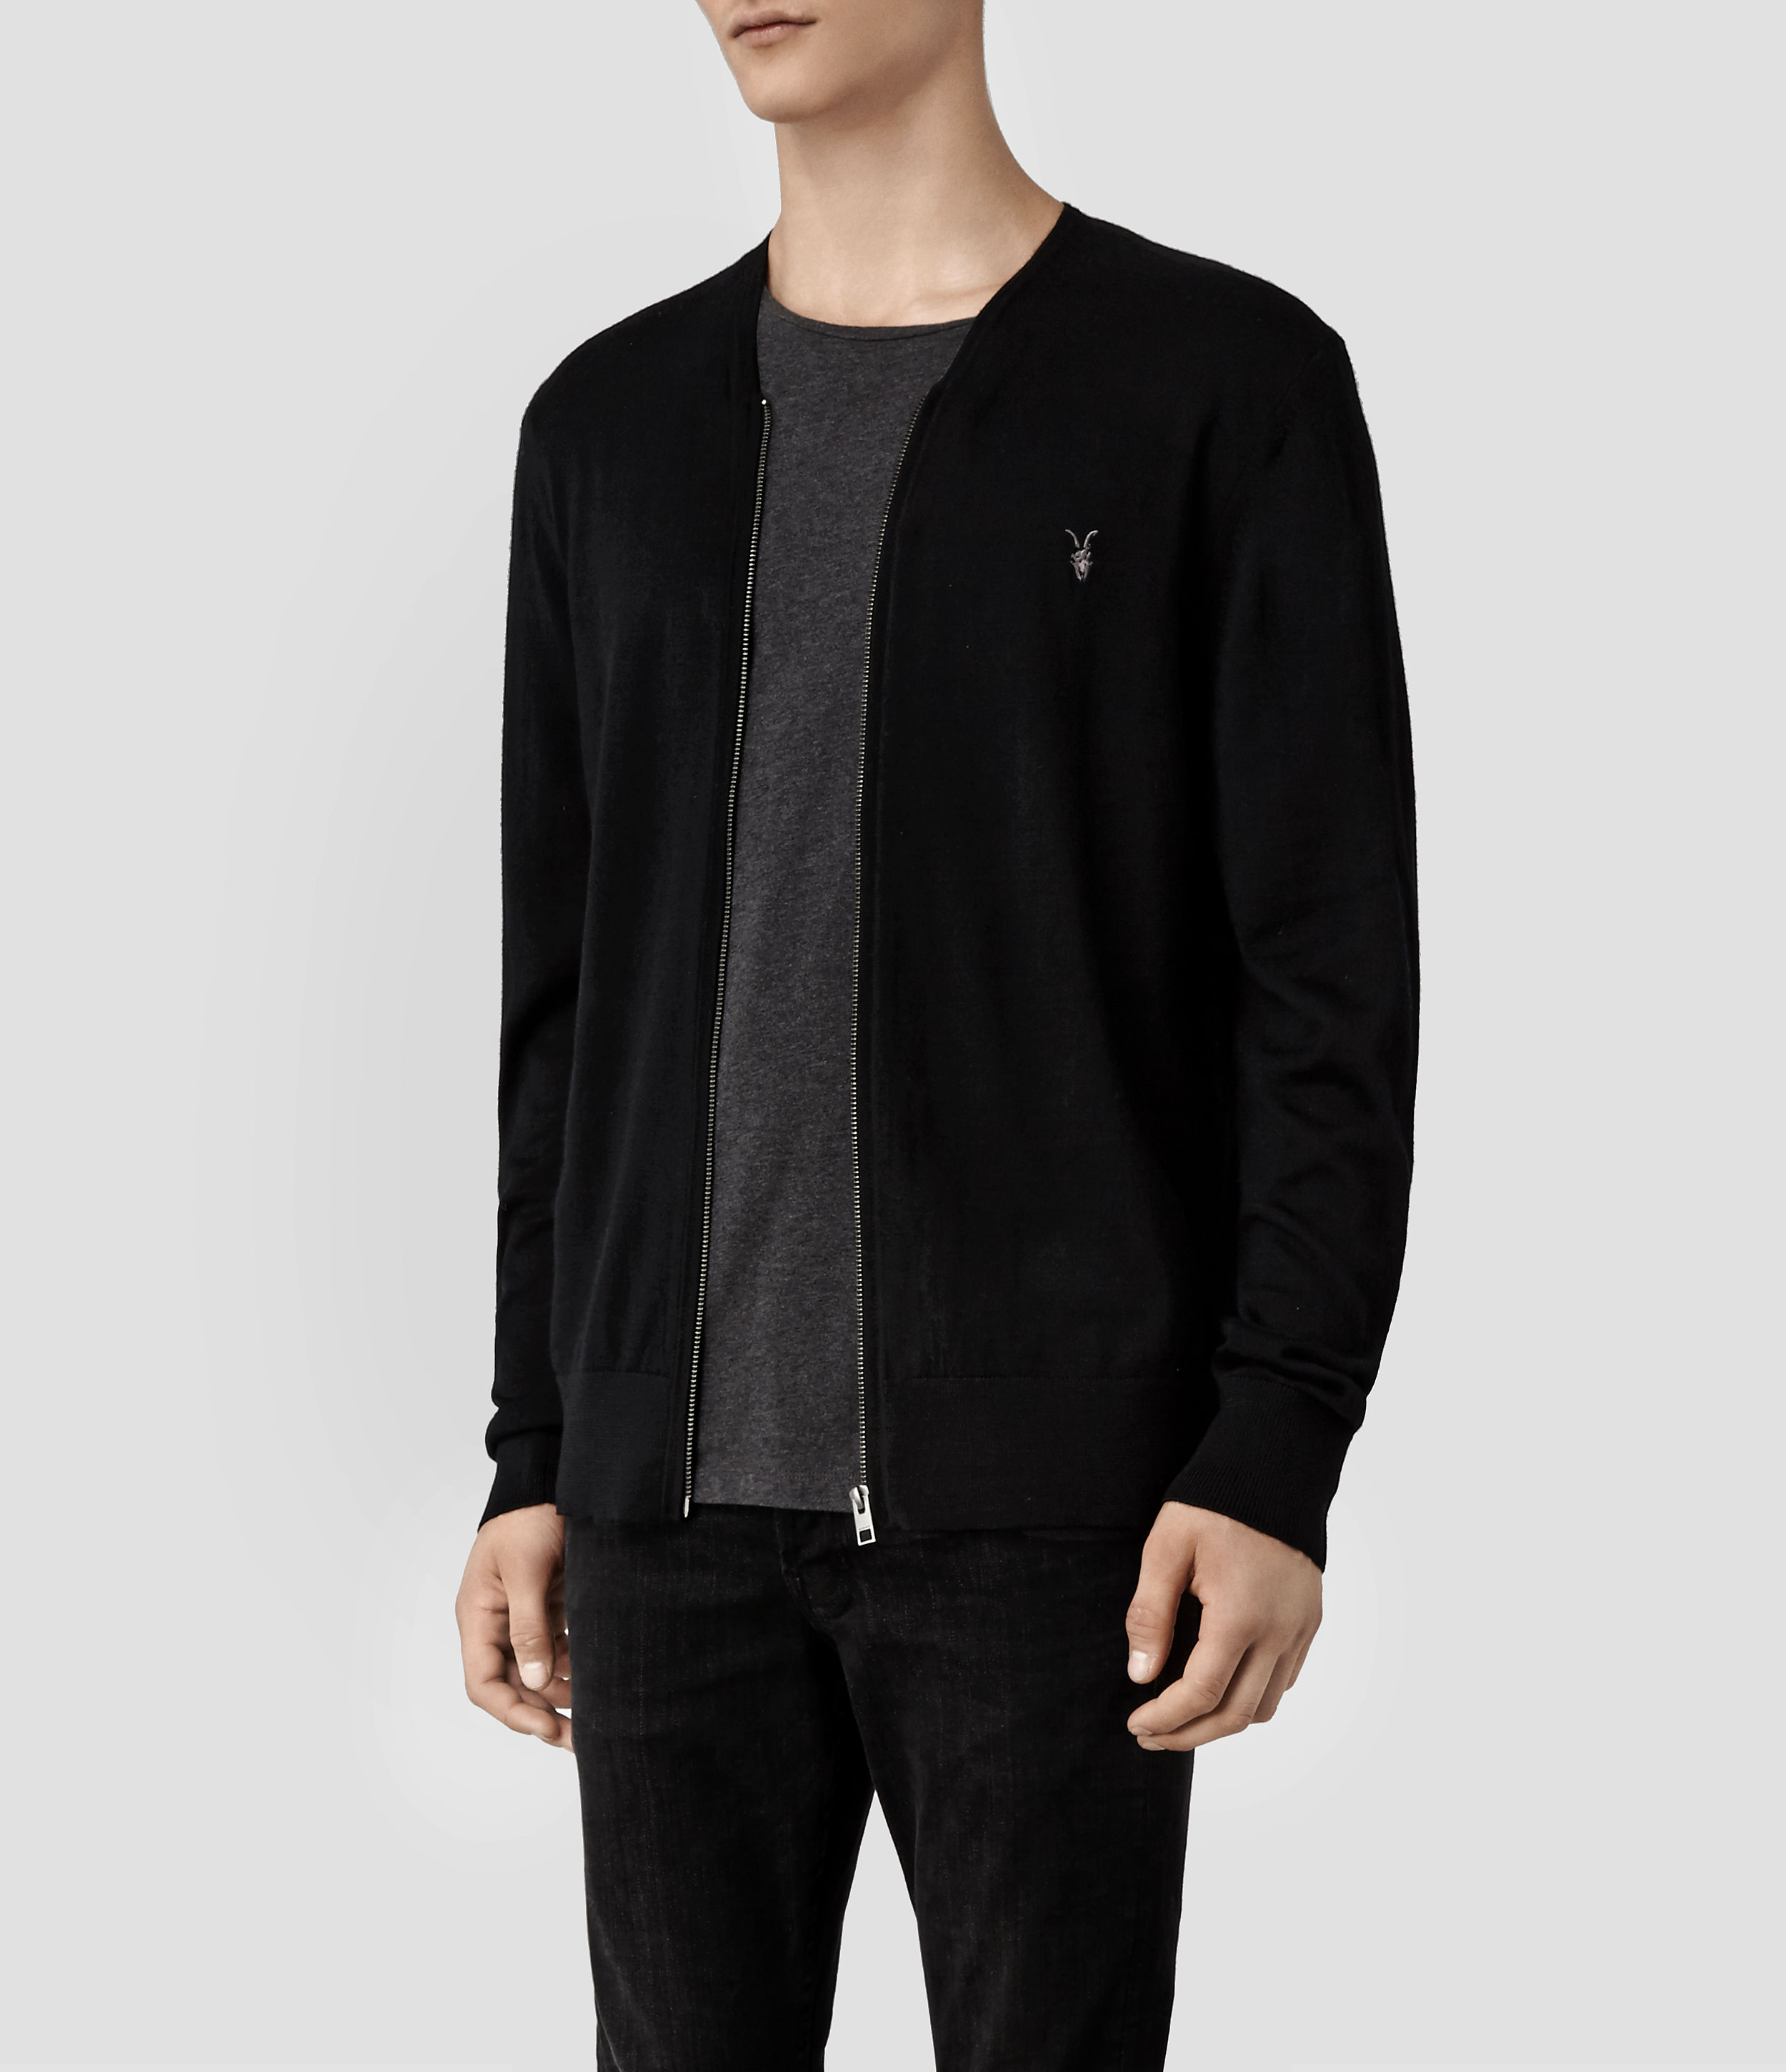 AllSaints Mode Merino Zip Cardigan in Black for Men - Lyst